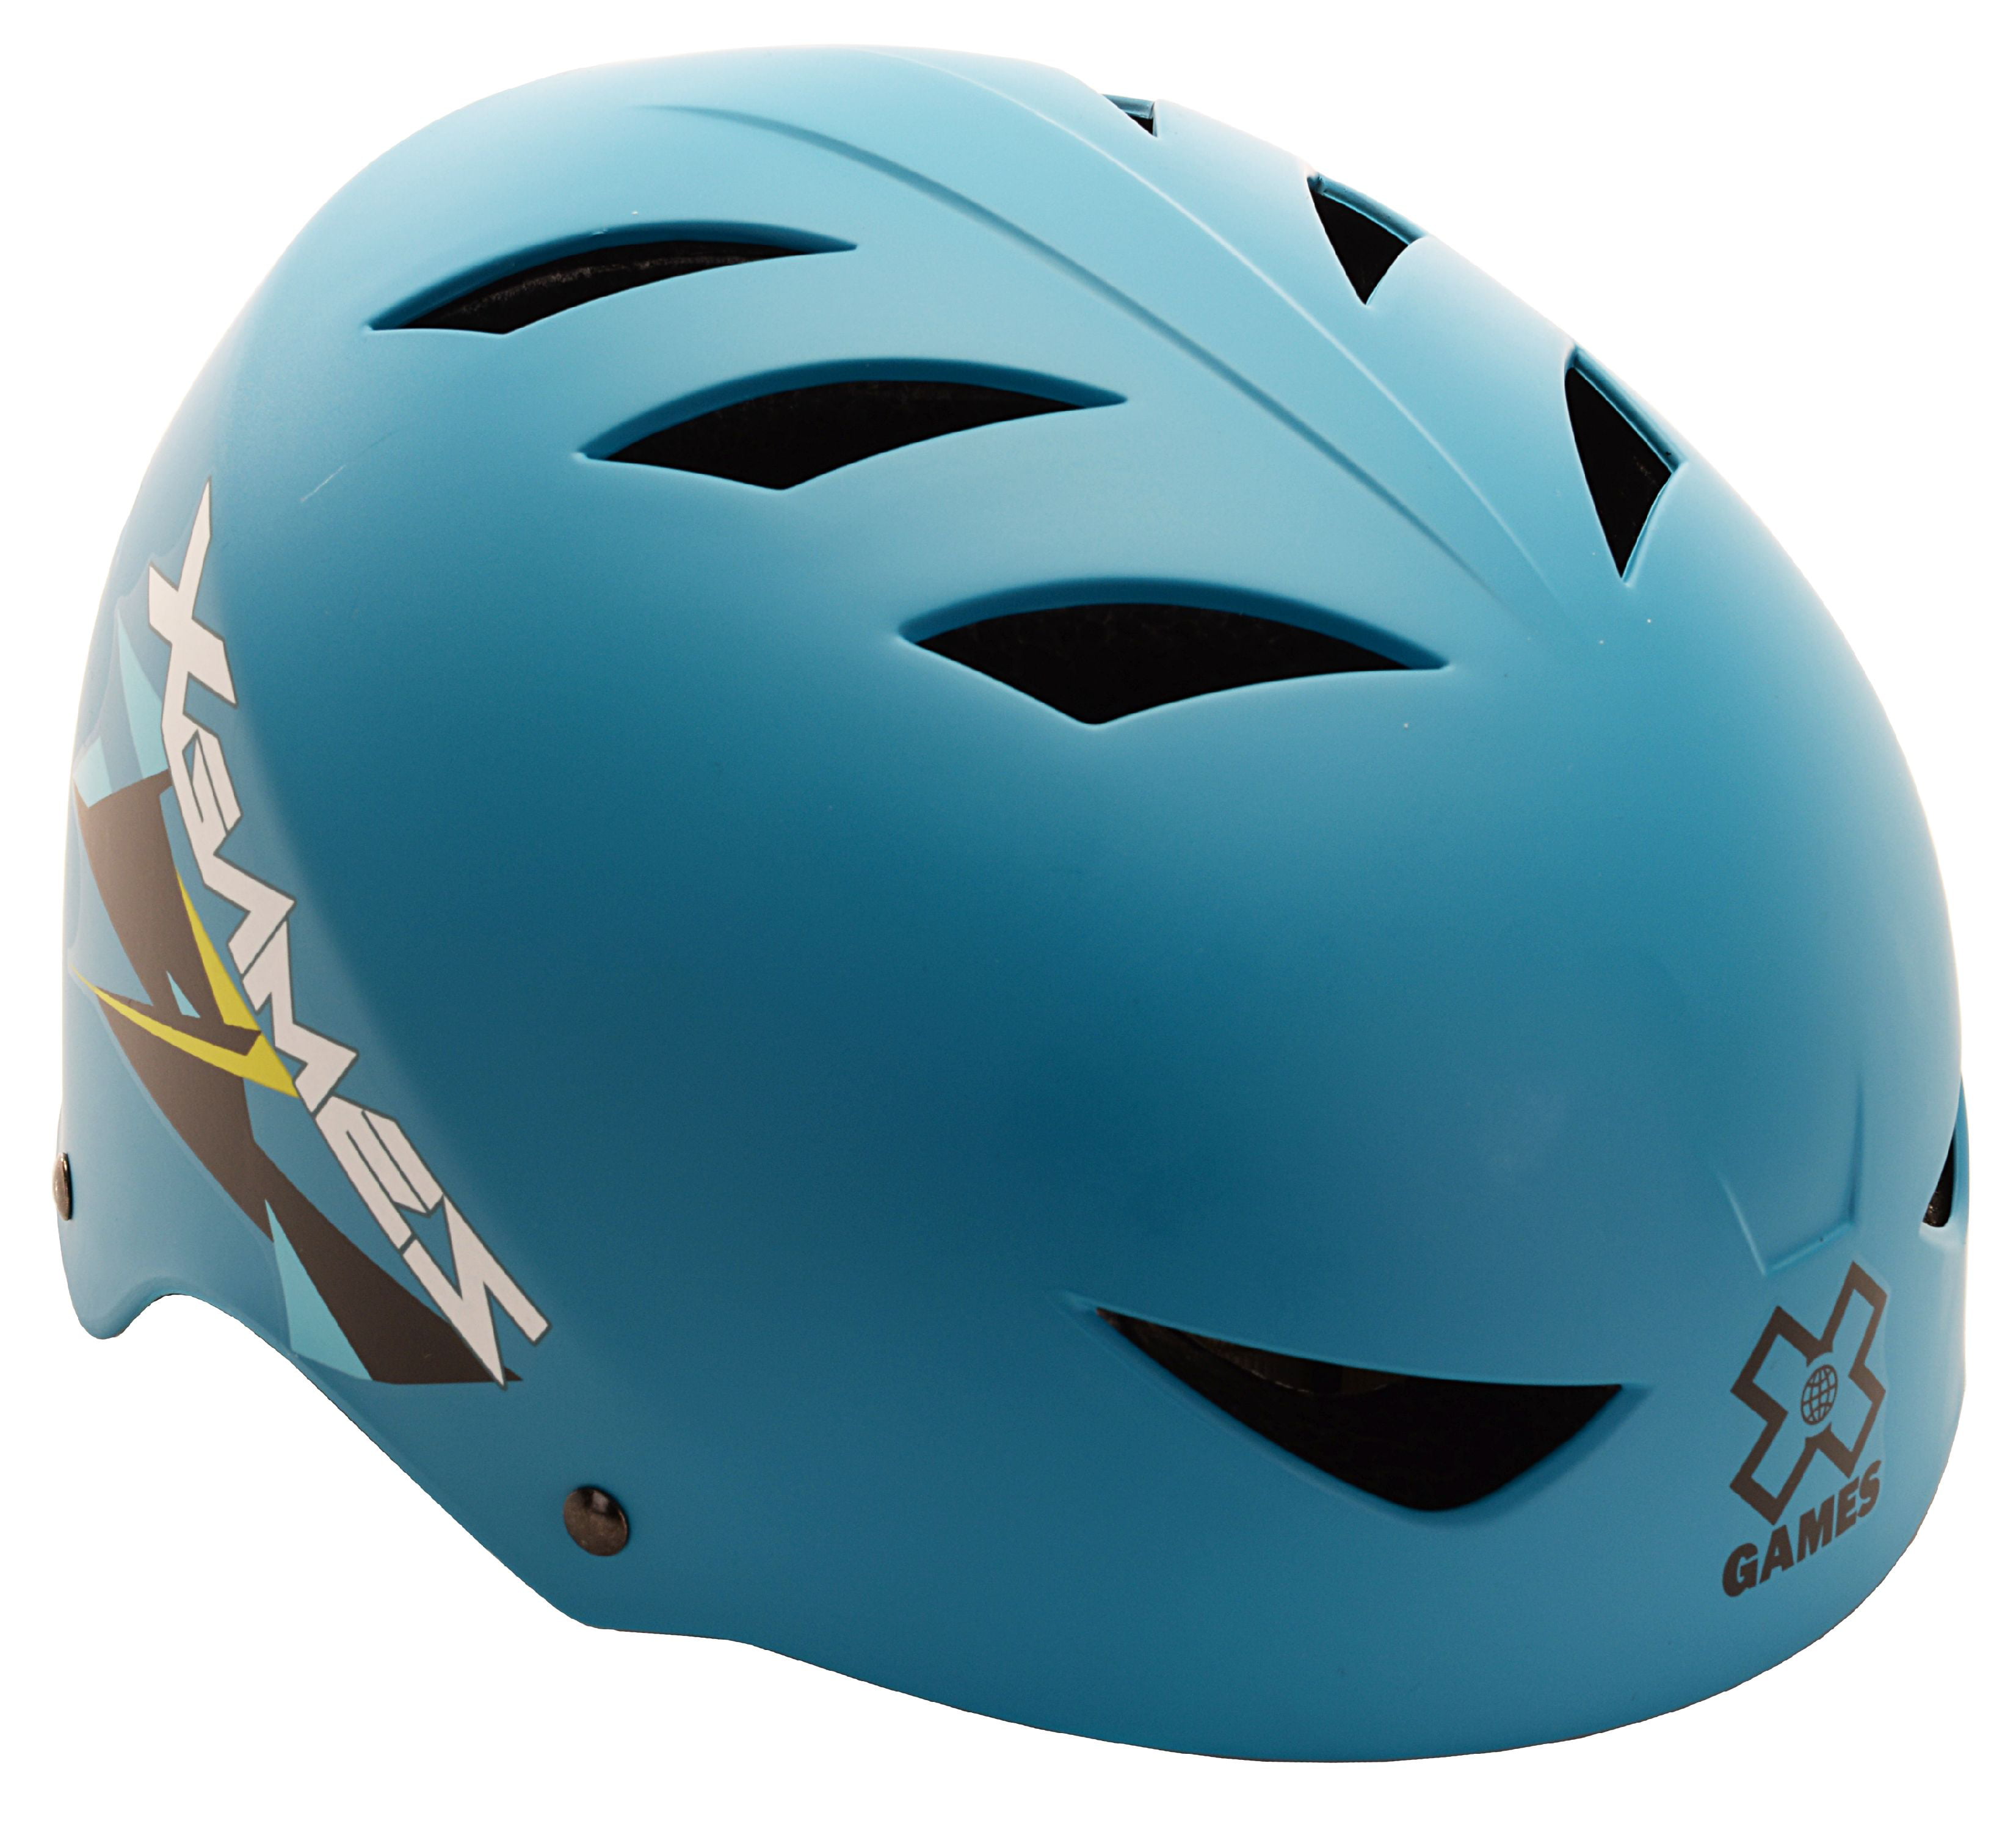 X Games Multi-Sport Helmet Satin Teal Kent International Inc 97405 